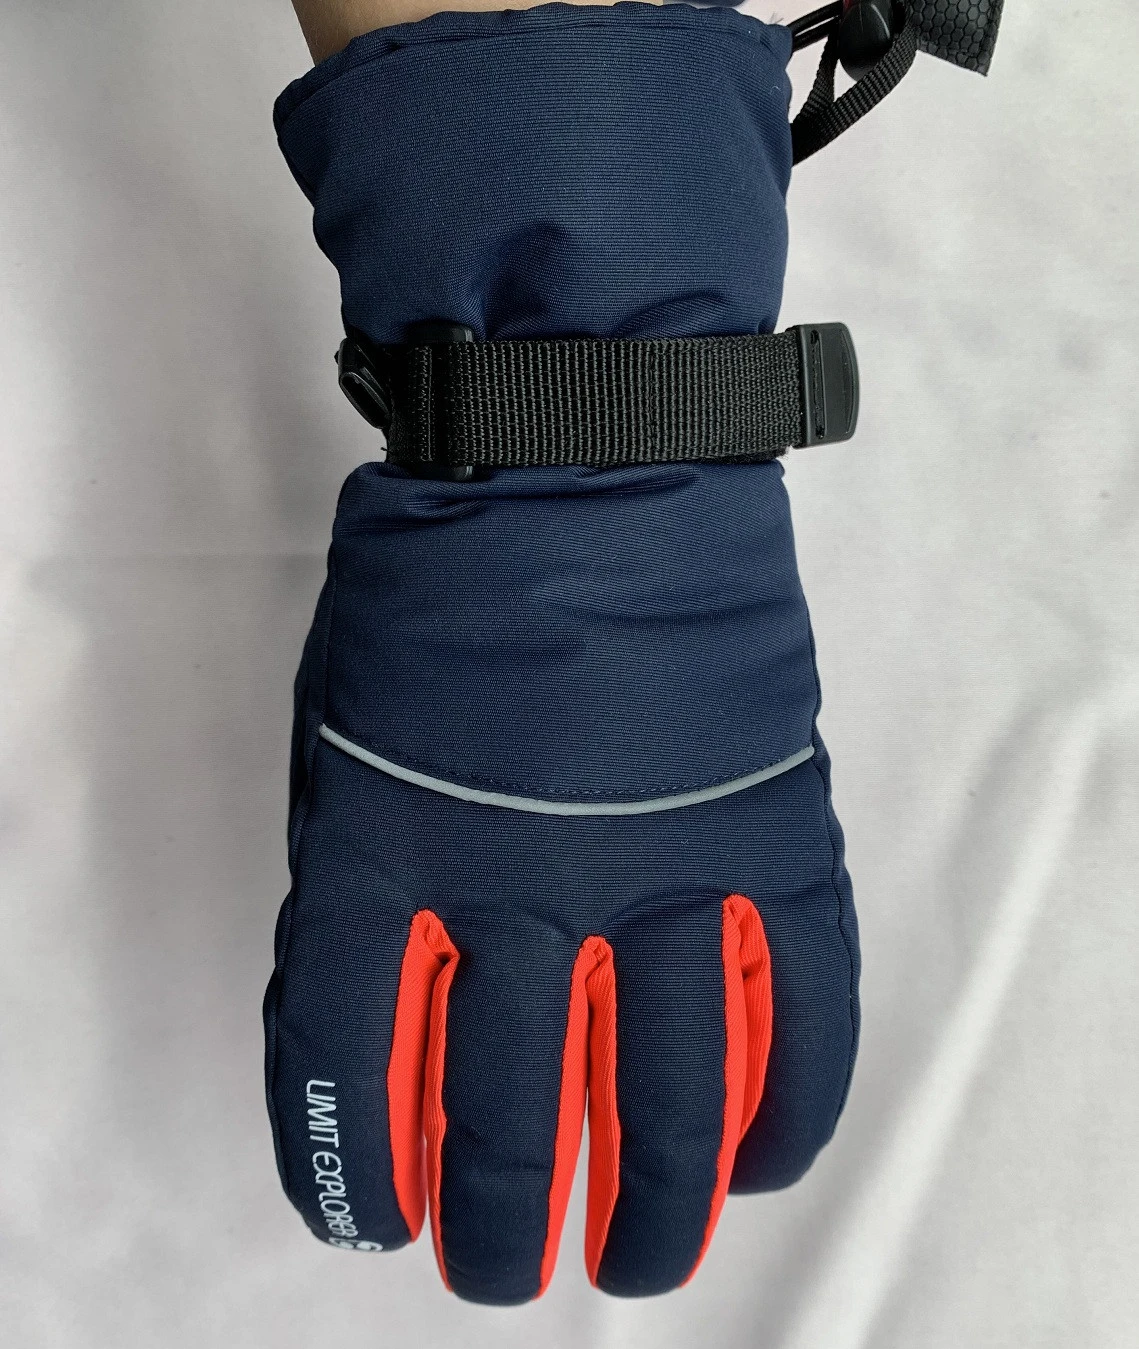 Fashionable cool winter ski/snowboarding water repellent ski gloves